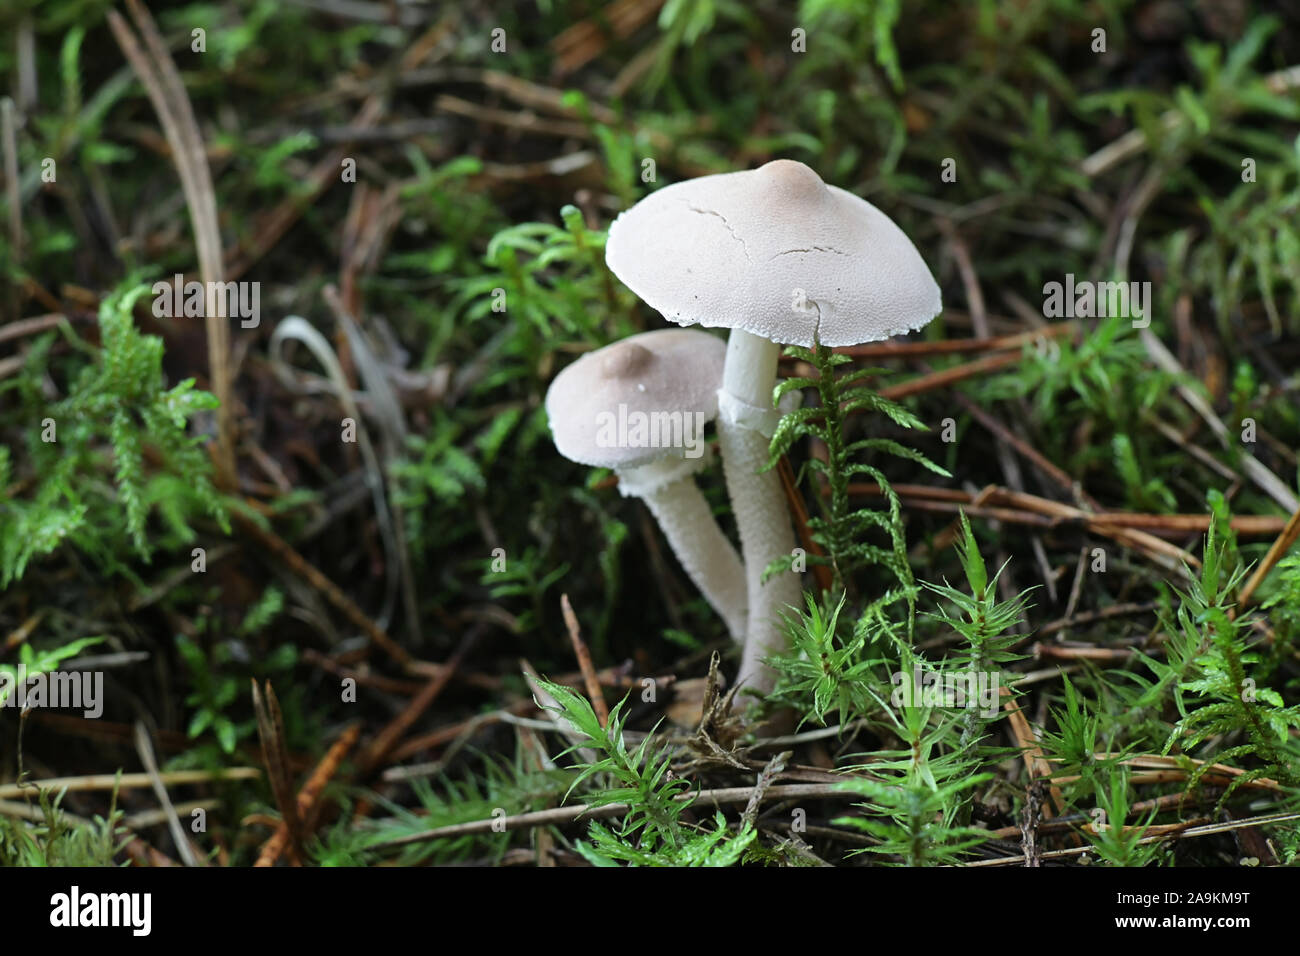 Cystoderma carcharias, wie den Perligen Powdercap, wilde Pilze aus Finnland bekannt Stockfoto